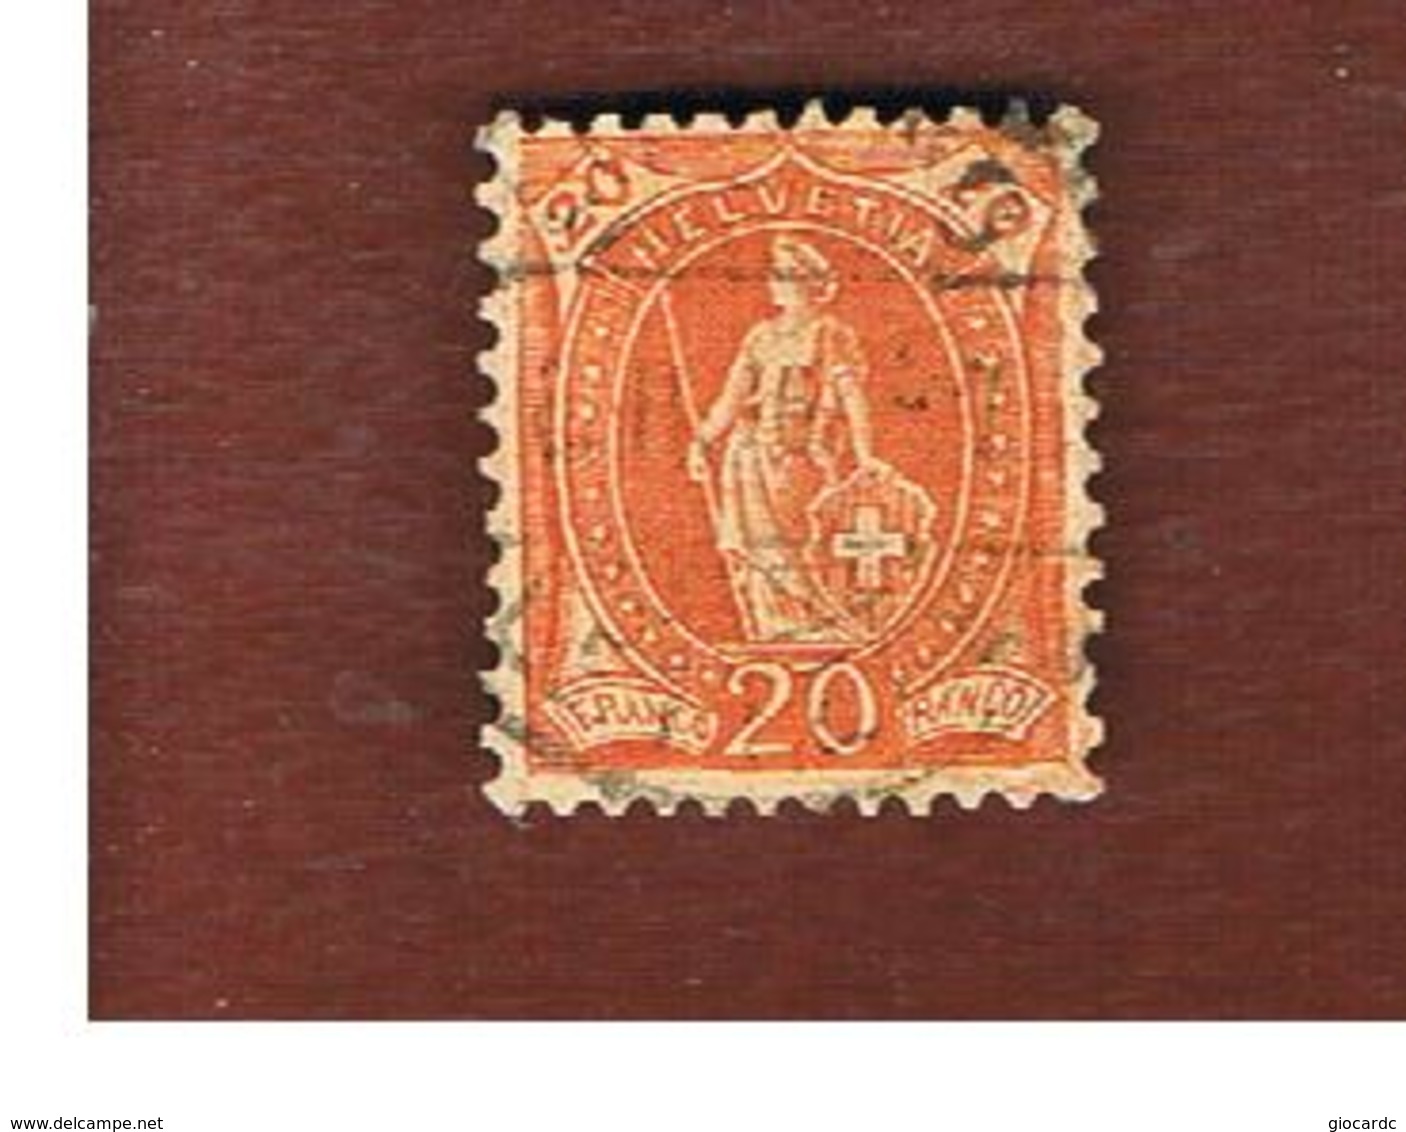 SVIZZERA (SWITZERLAND) -  SG 214 -  1882  STANDING HELVETIA 20  - USED - Used Stamps